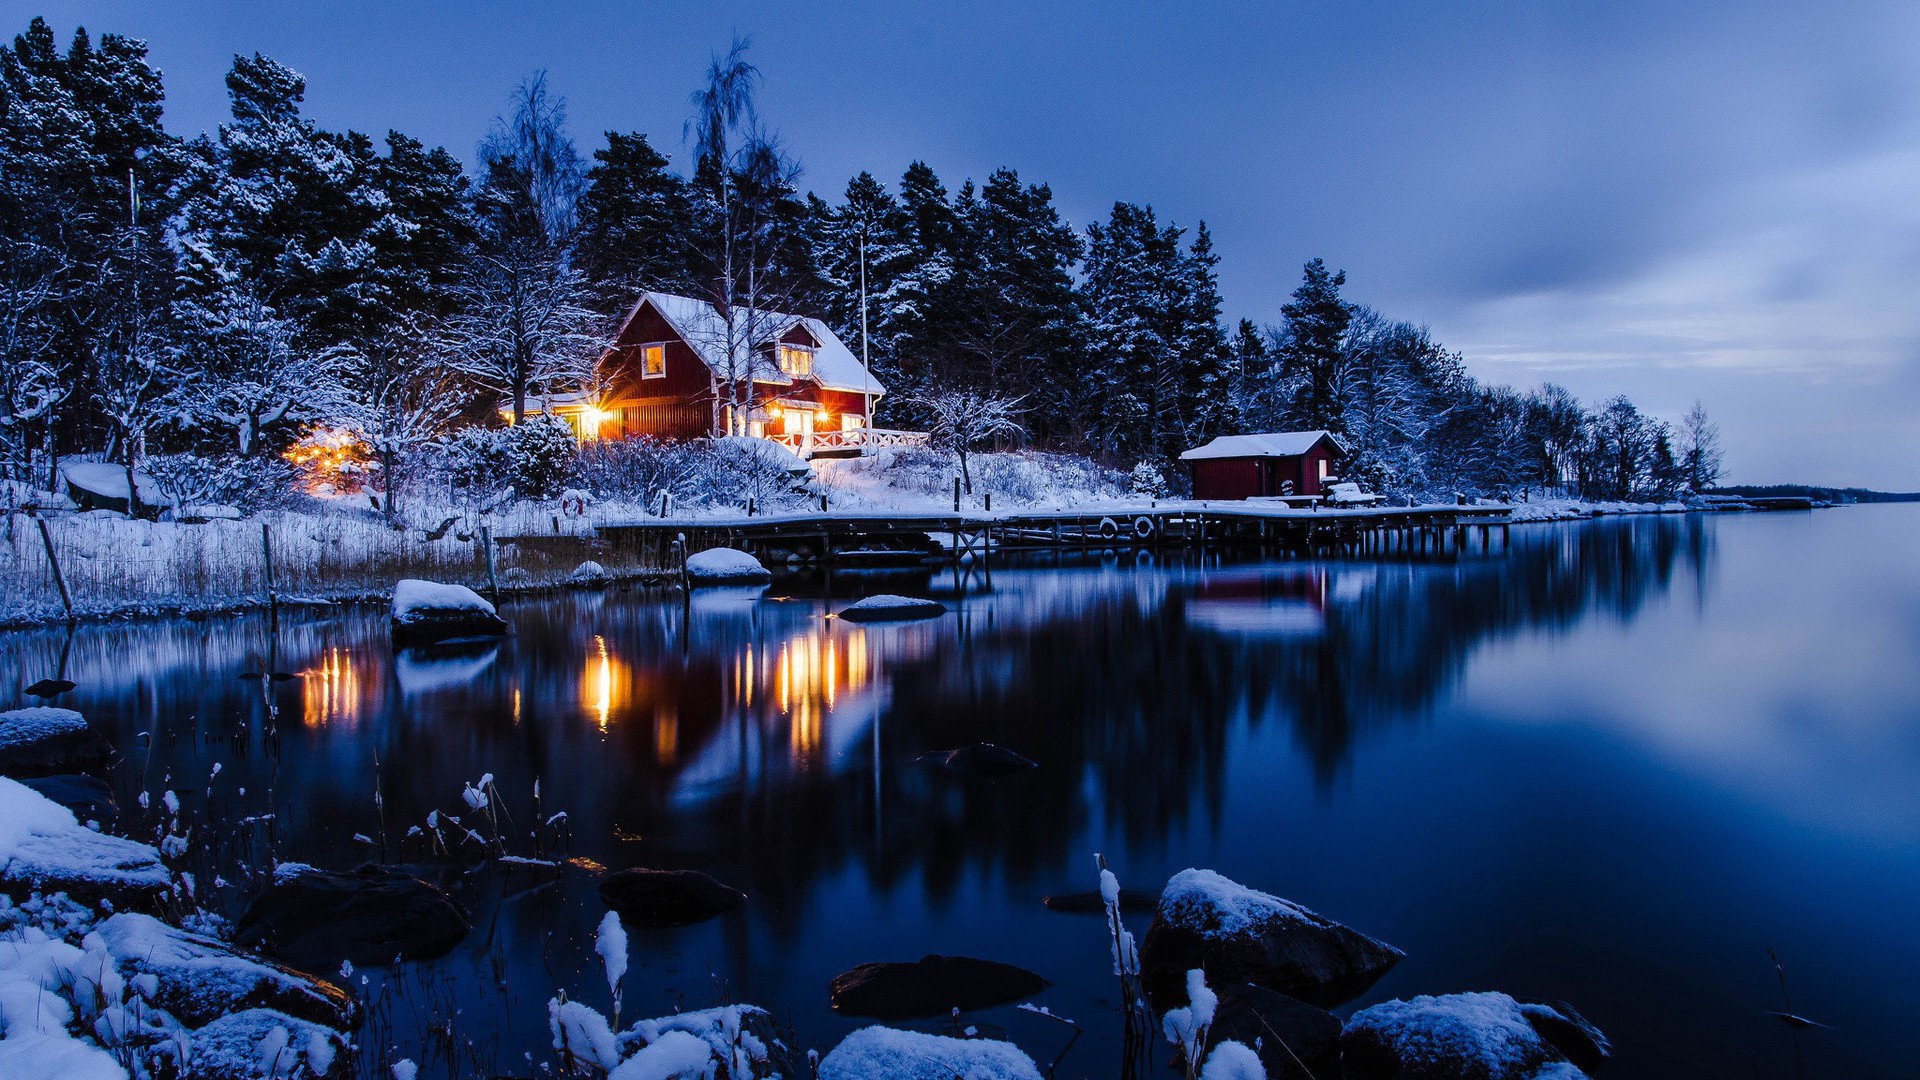 277559 night cabin Sweden snow winter landscape space